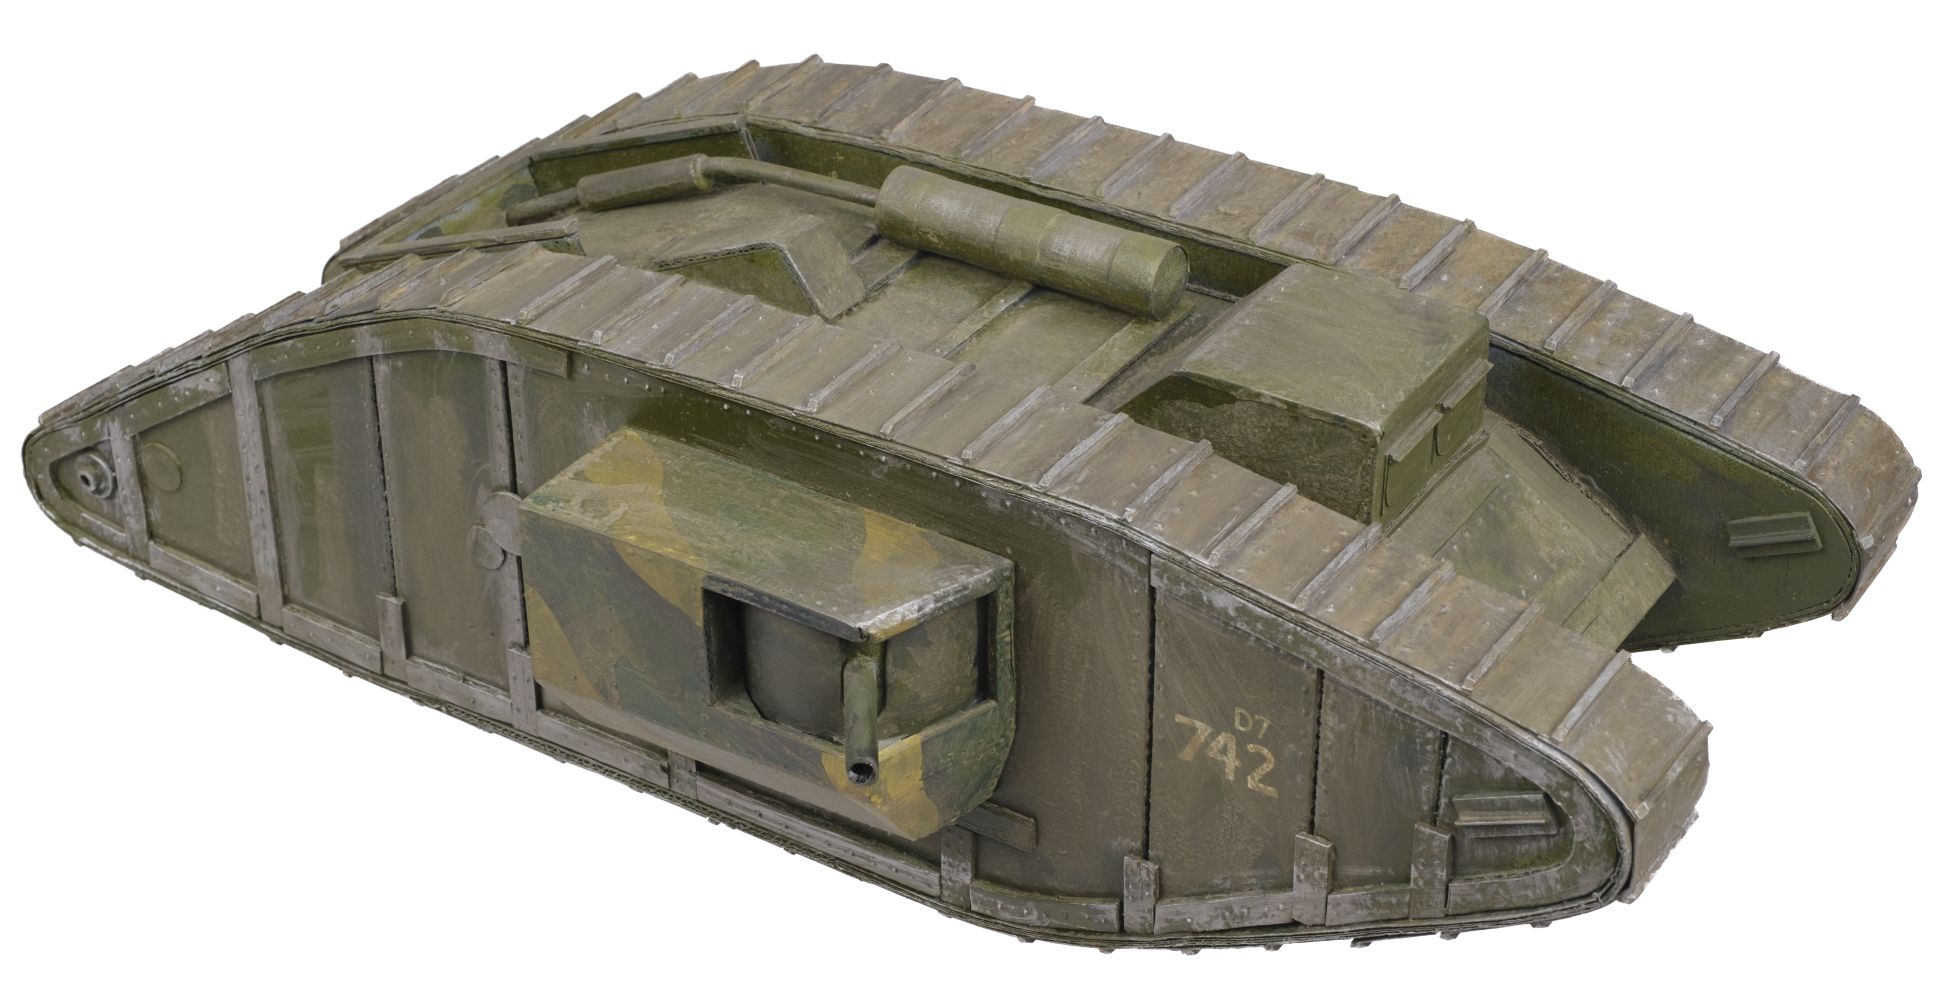 WWI Tank. A large scratch-built model of a WWI British tank D7 742